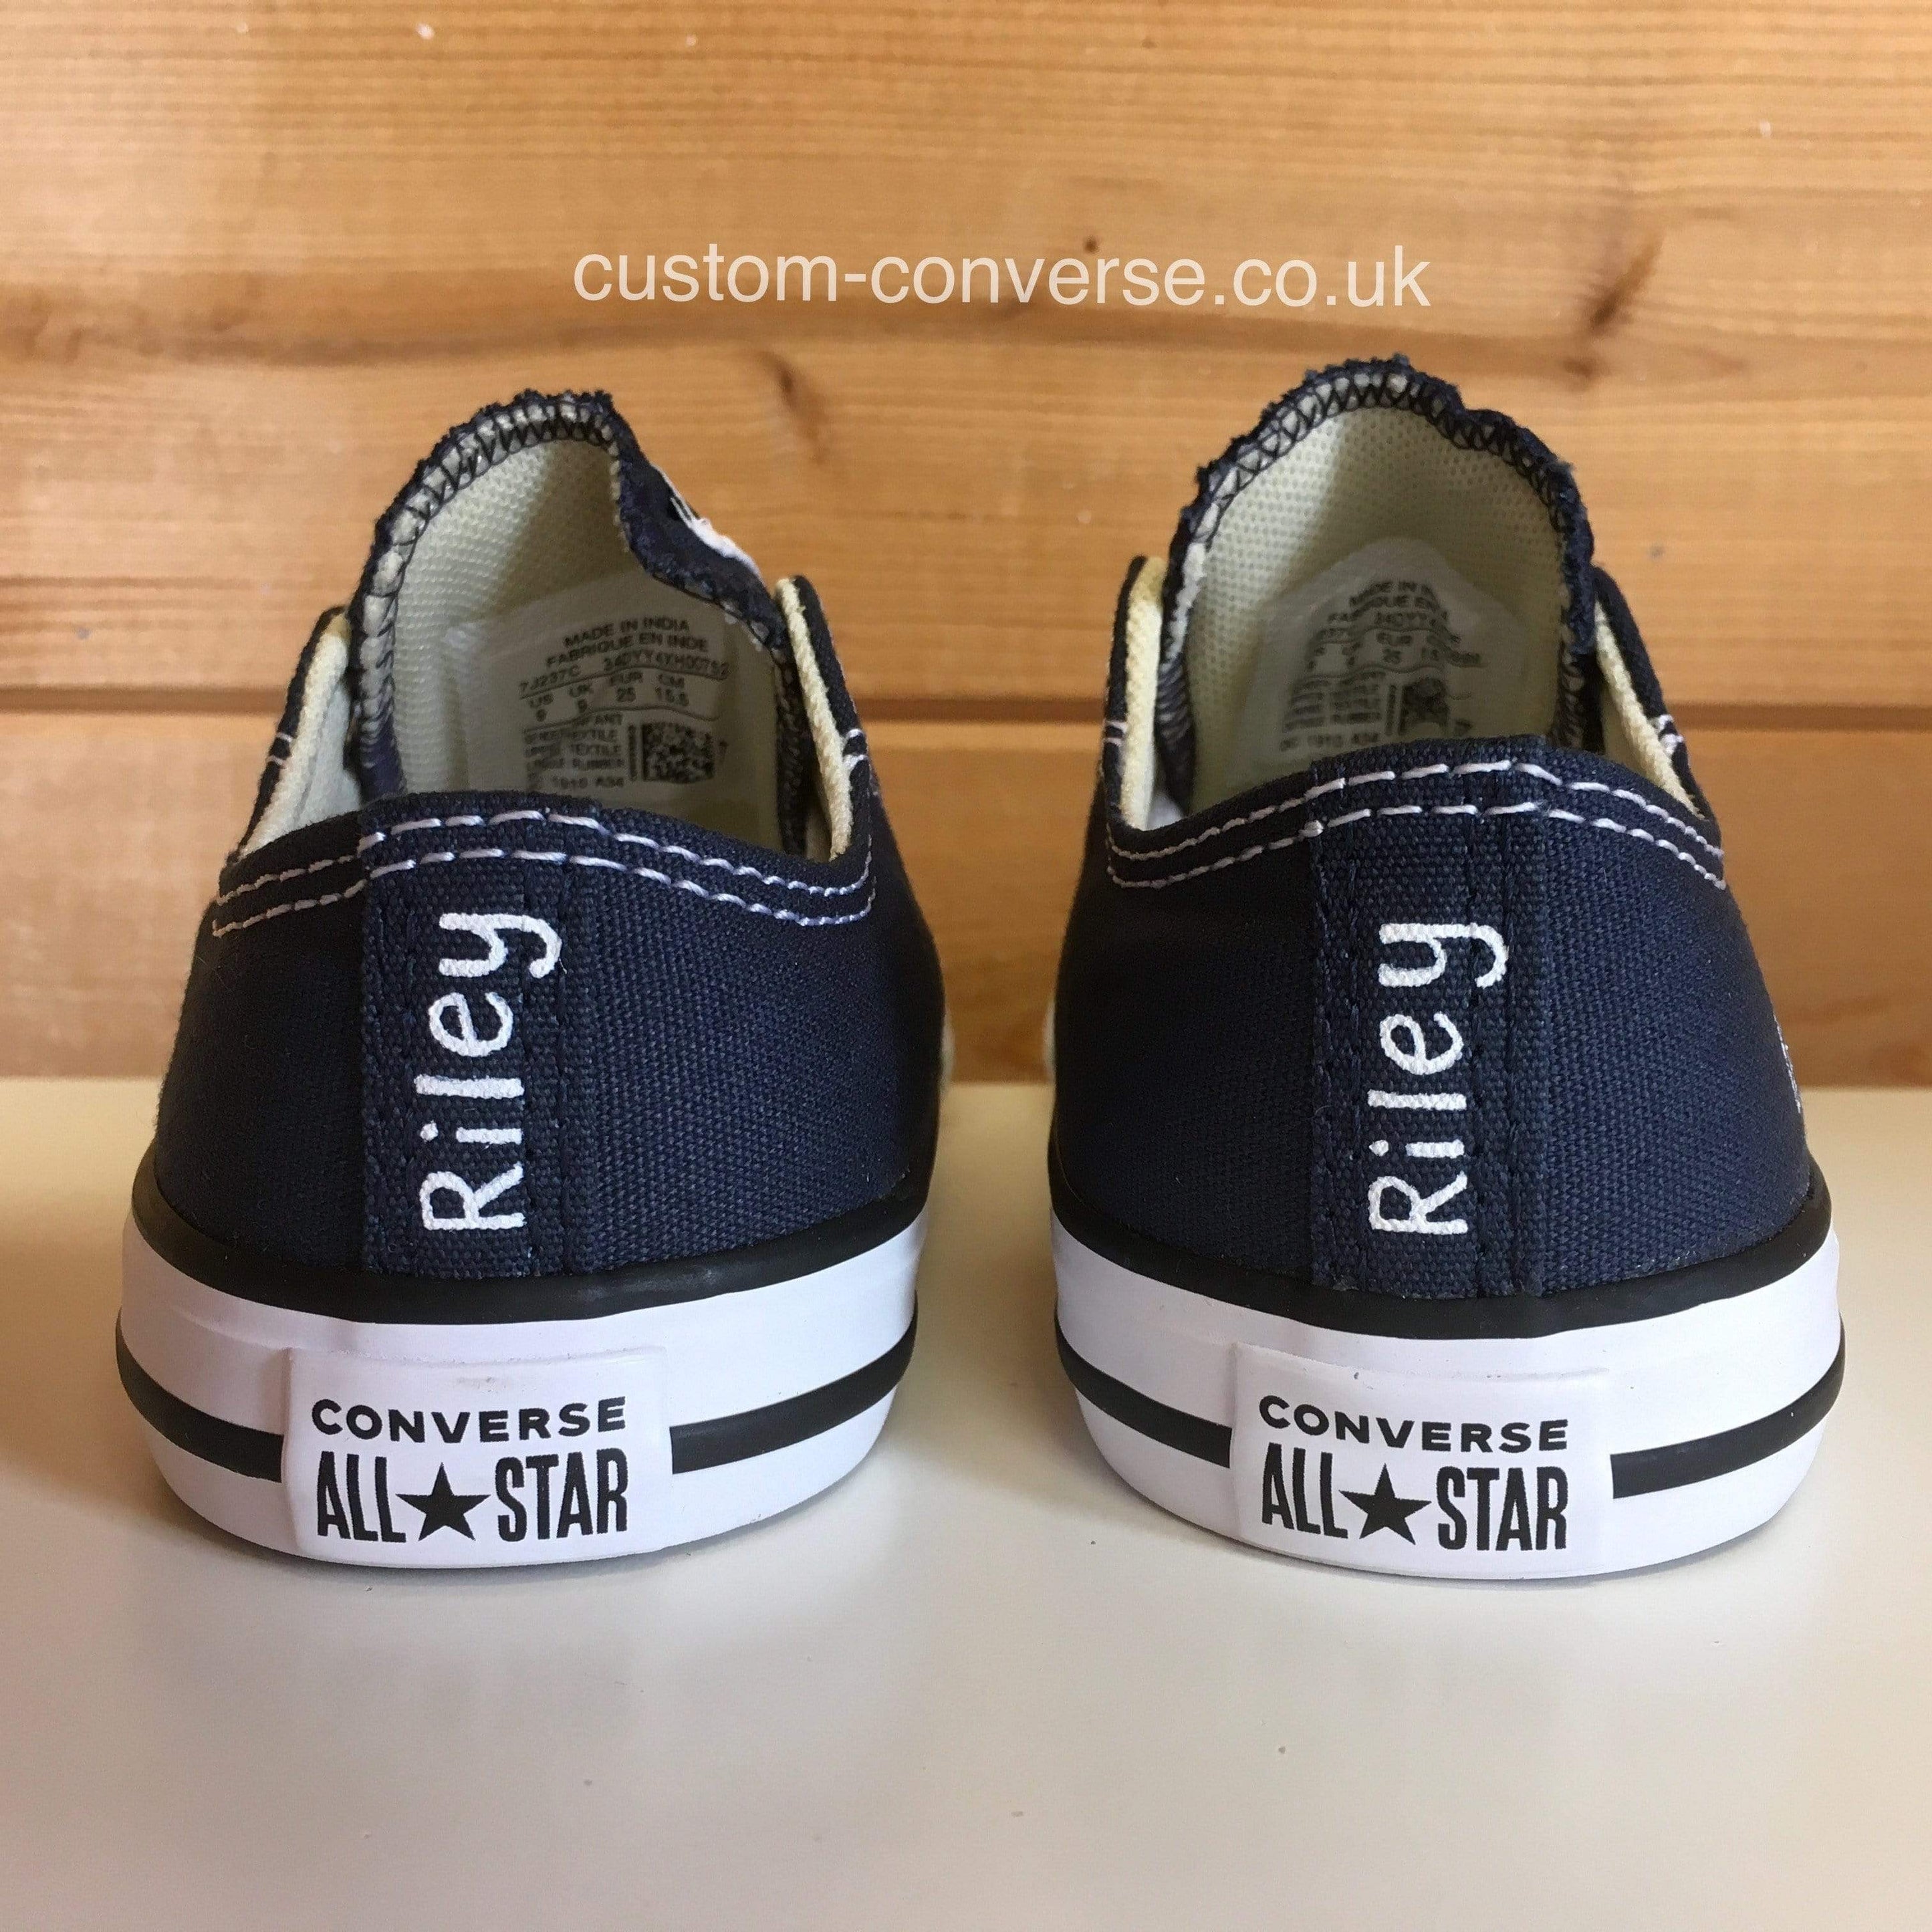 Kids Personalised Converse | Custom Converse Ltd